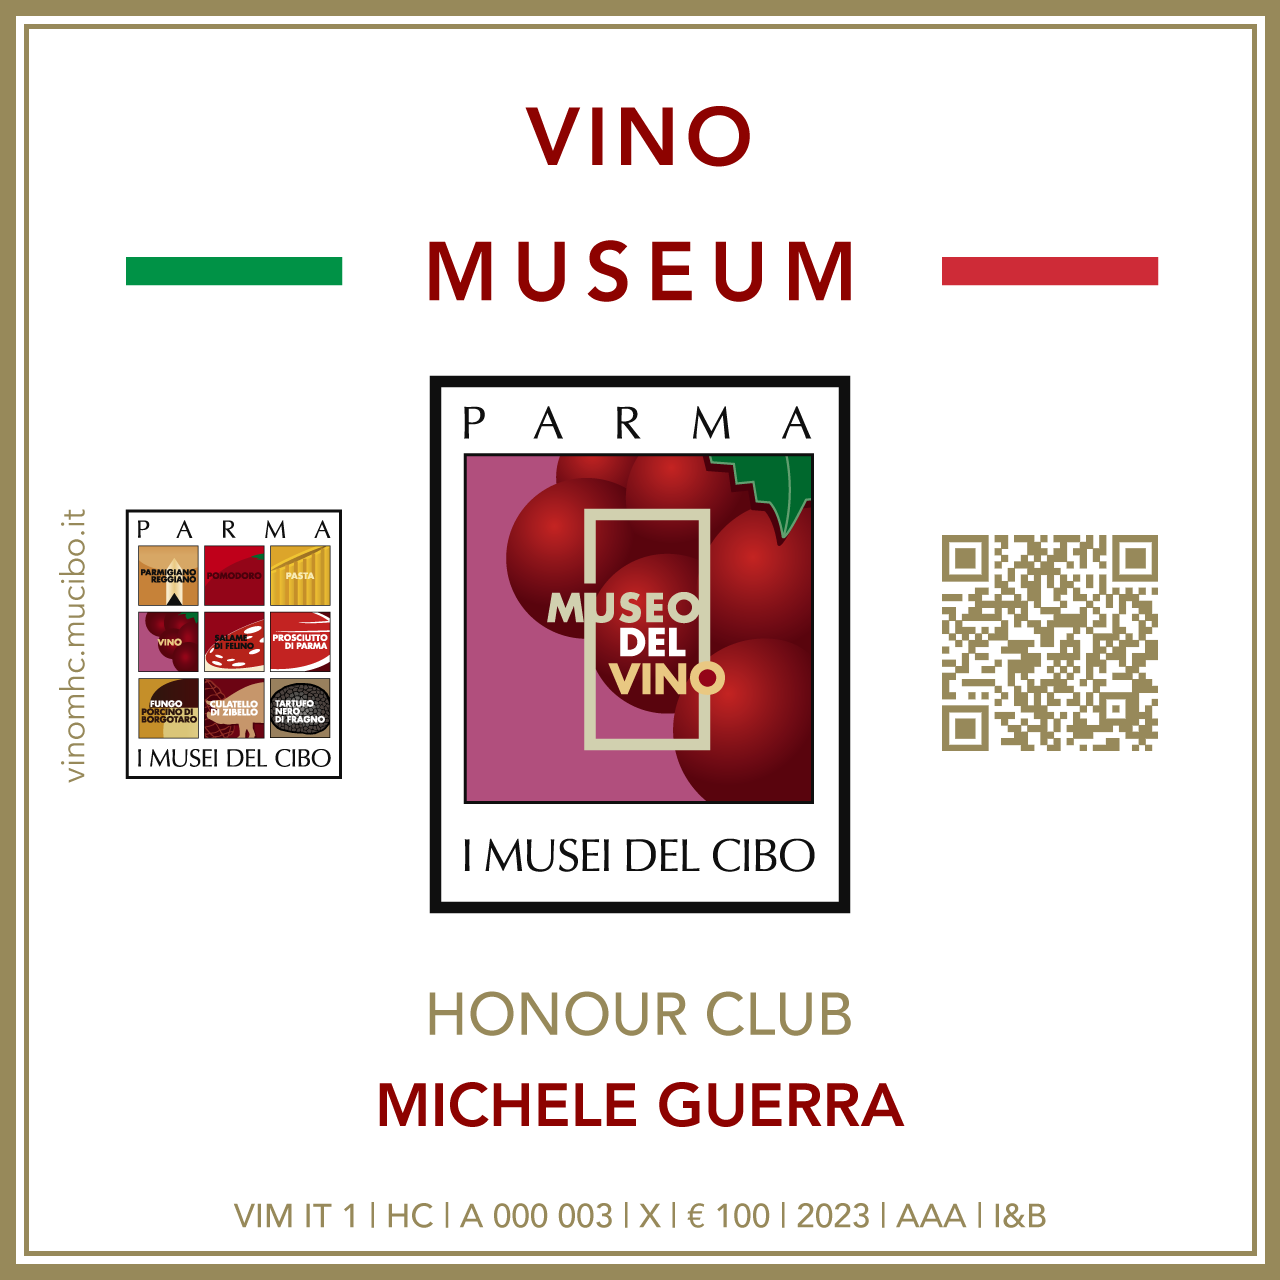 Vino Museum Honour Club - Token Id A 000 003 - MICHELE GUERRA